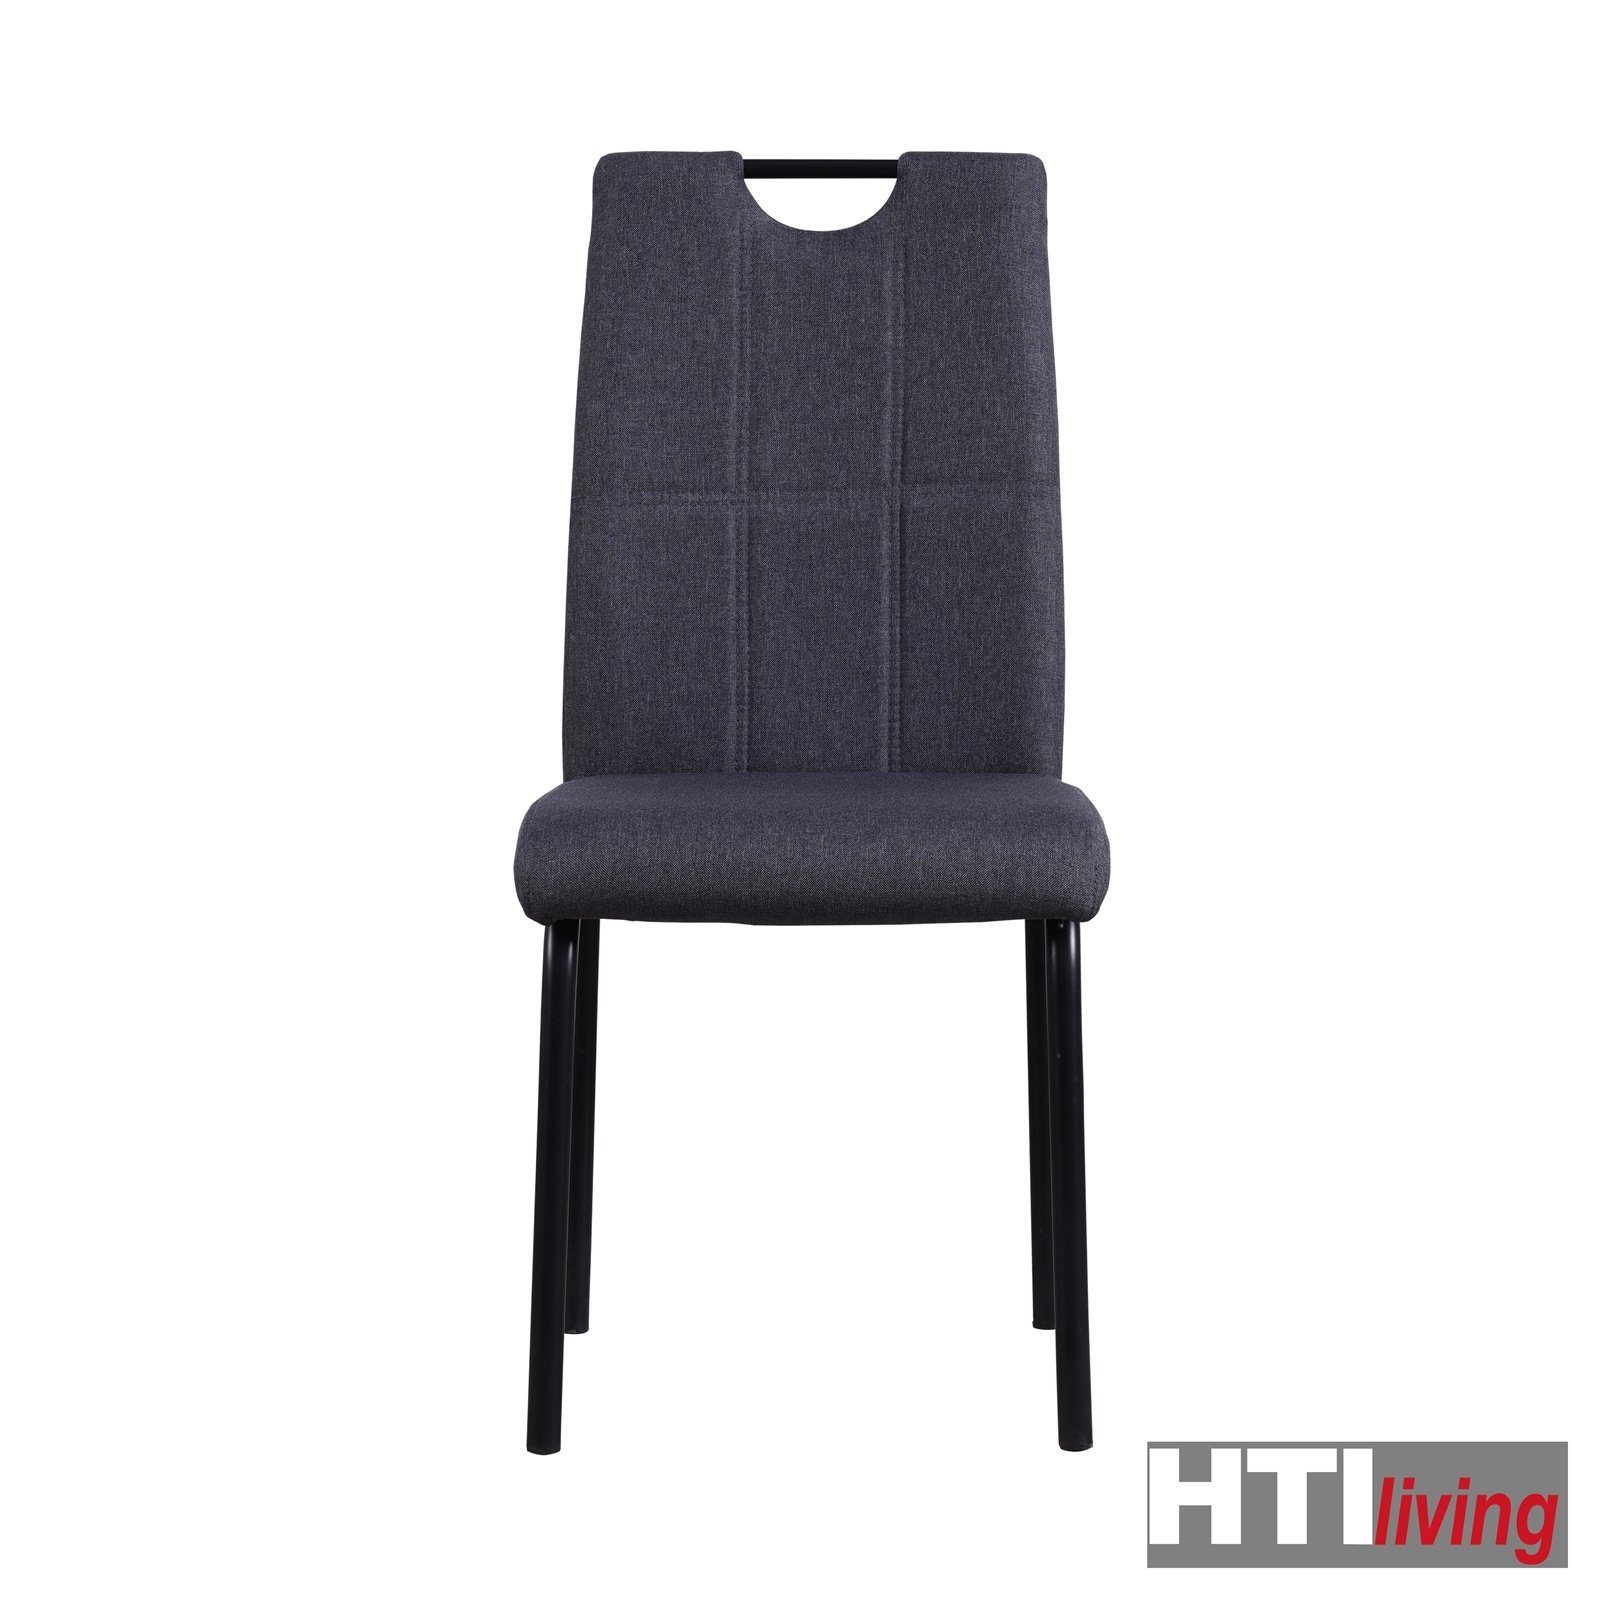 HTI-Living Esszimmerstuhl 2 Grau 2er-Set Stuhl Esszimmerstuhl Denton St), (Set